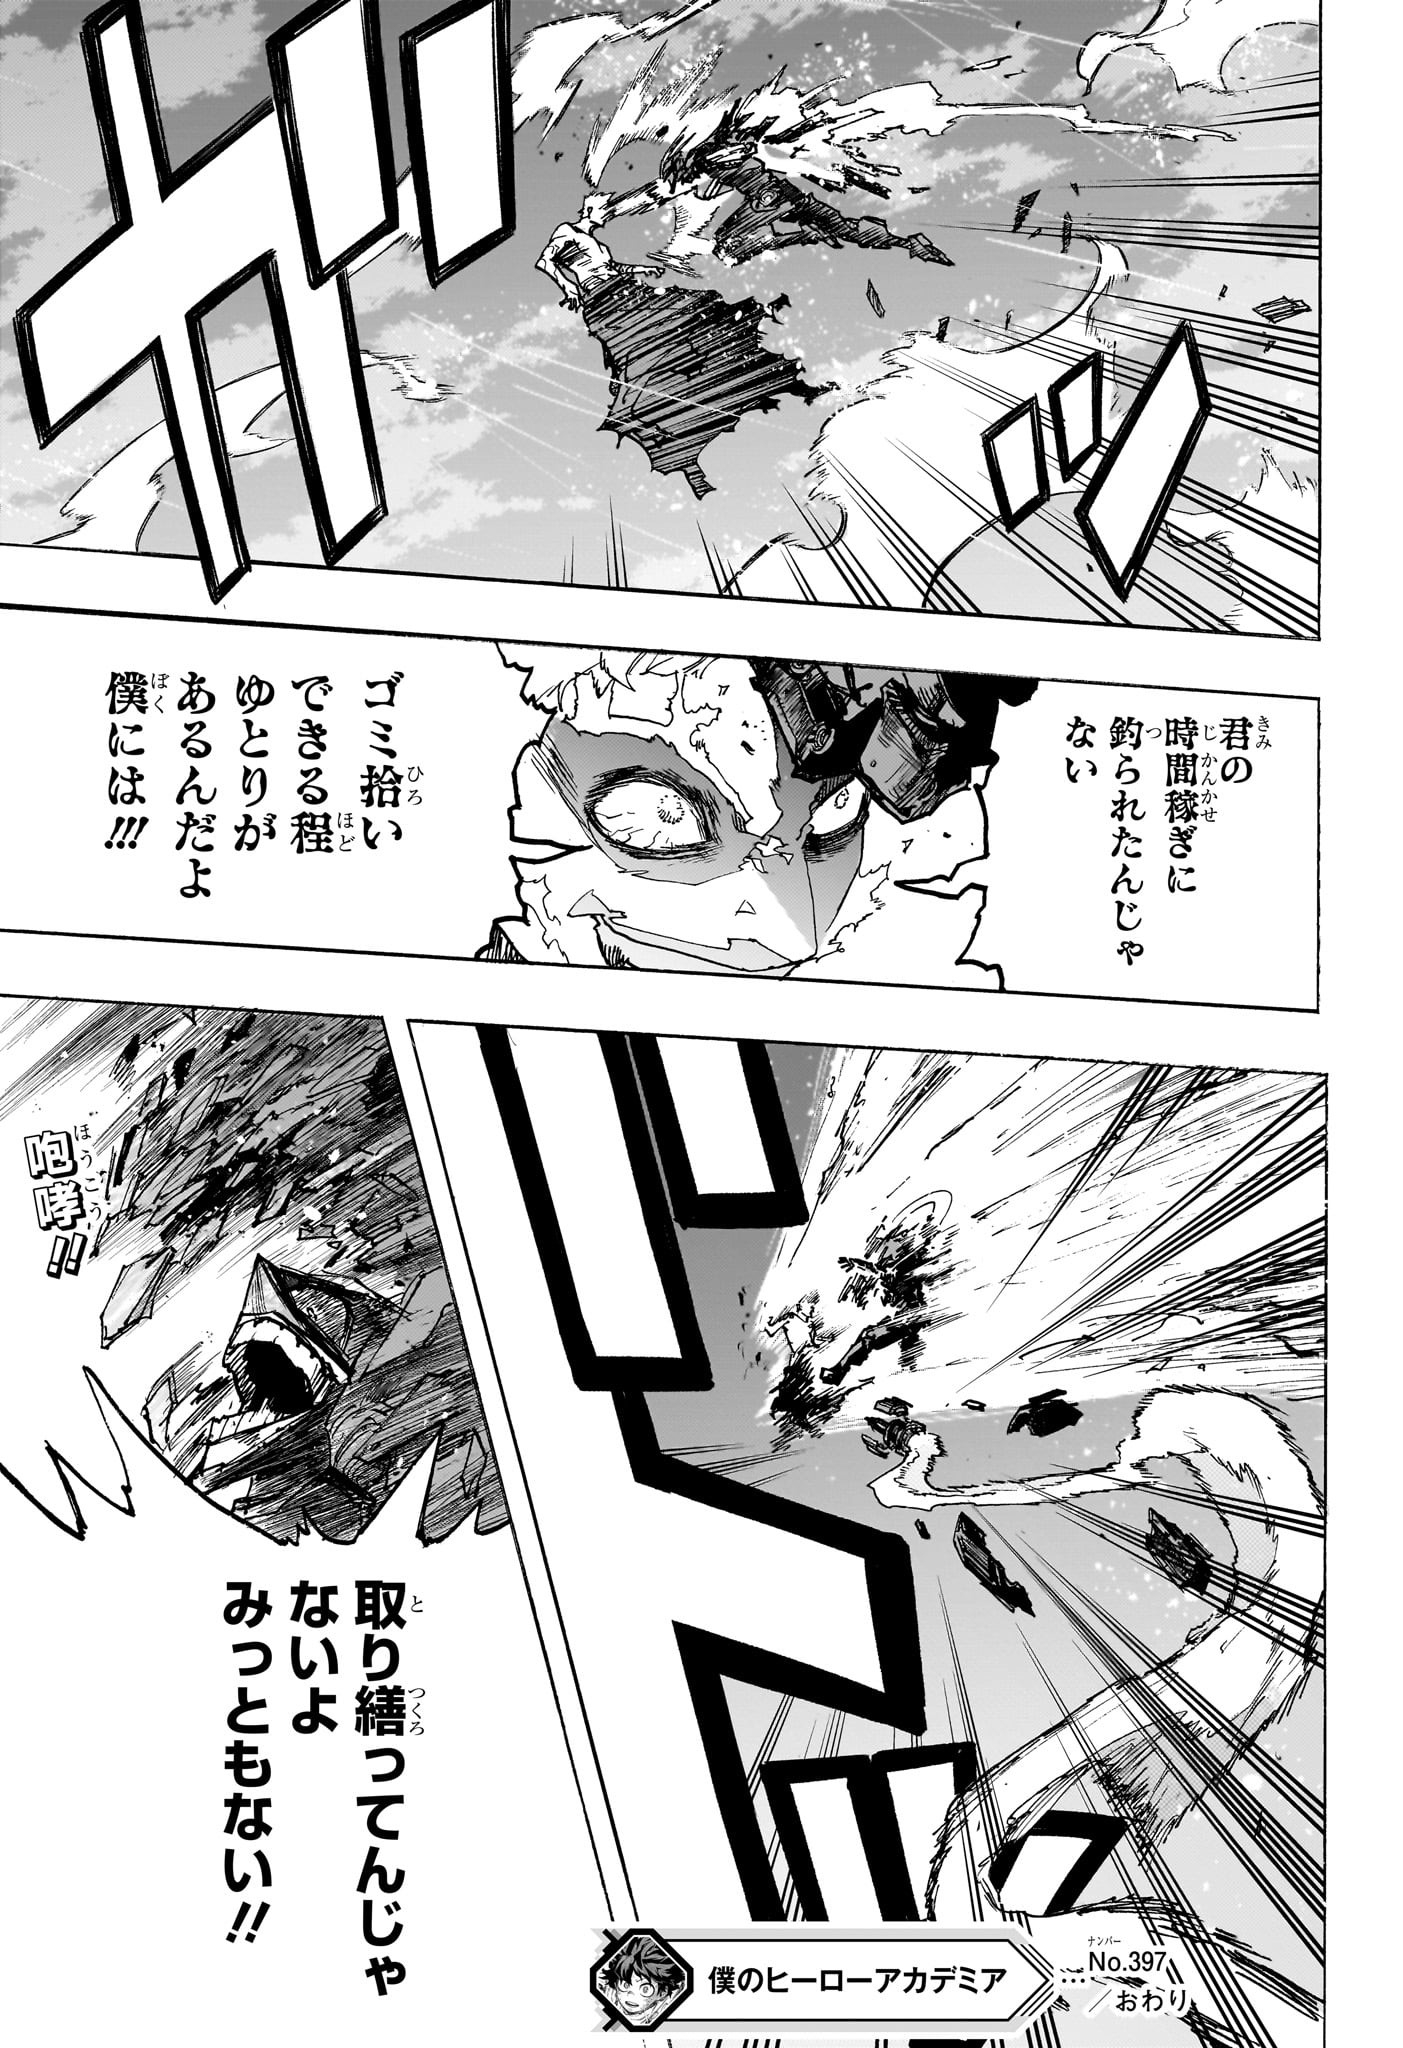 Boku no Hero Academia - Chapter 397 - Page 7